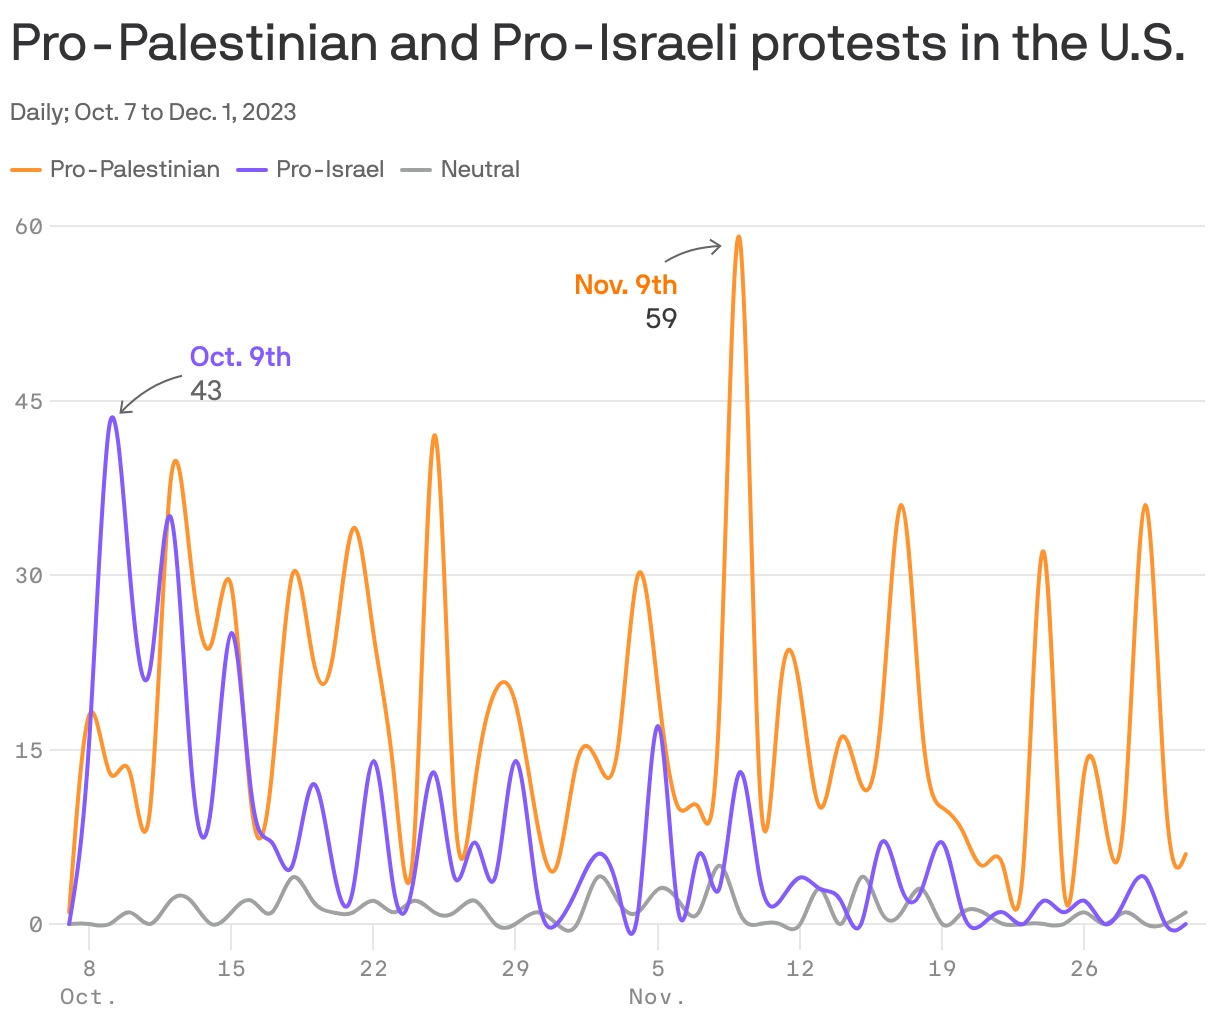 Israel-Palestine protests in the U.S.